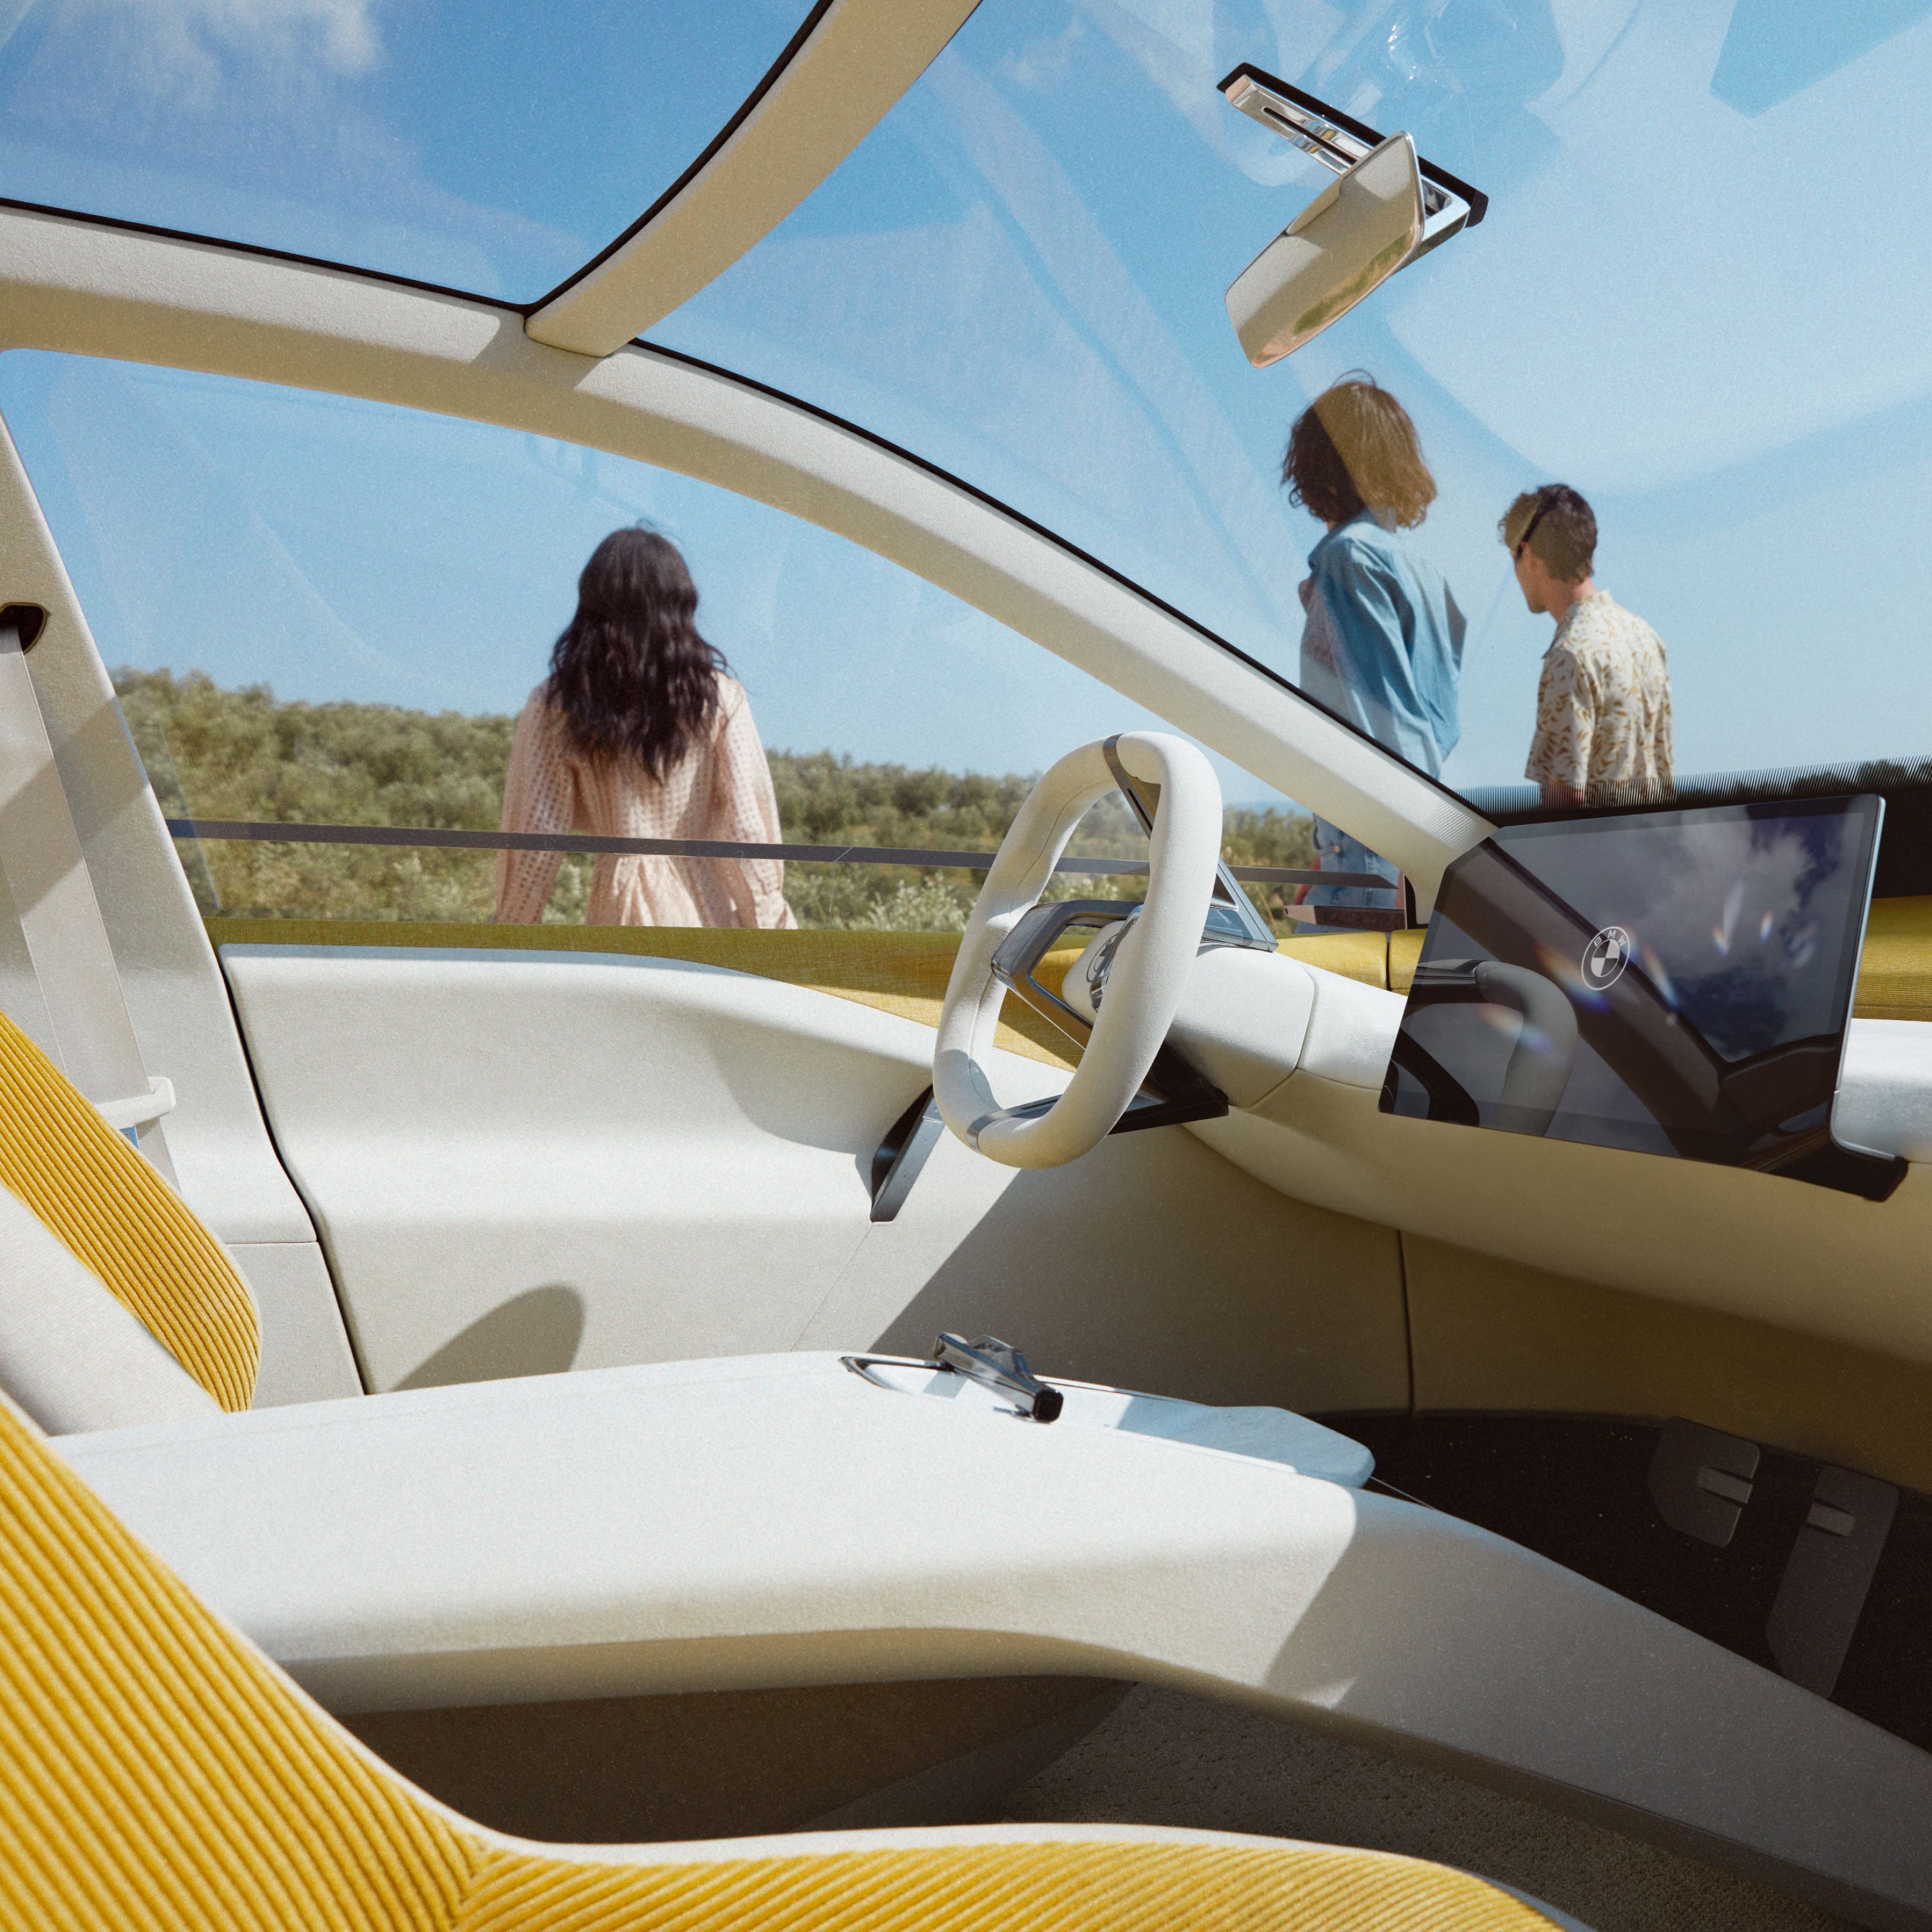 BMW Vision Neue Klasse, automobil concept 2023, interior, display BMW Panoramic Vision, BMW iDrive